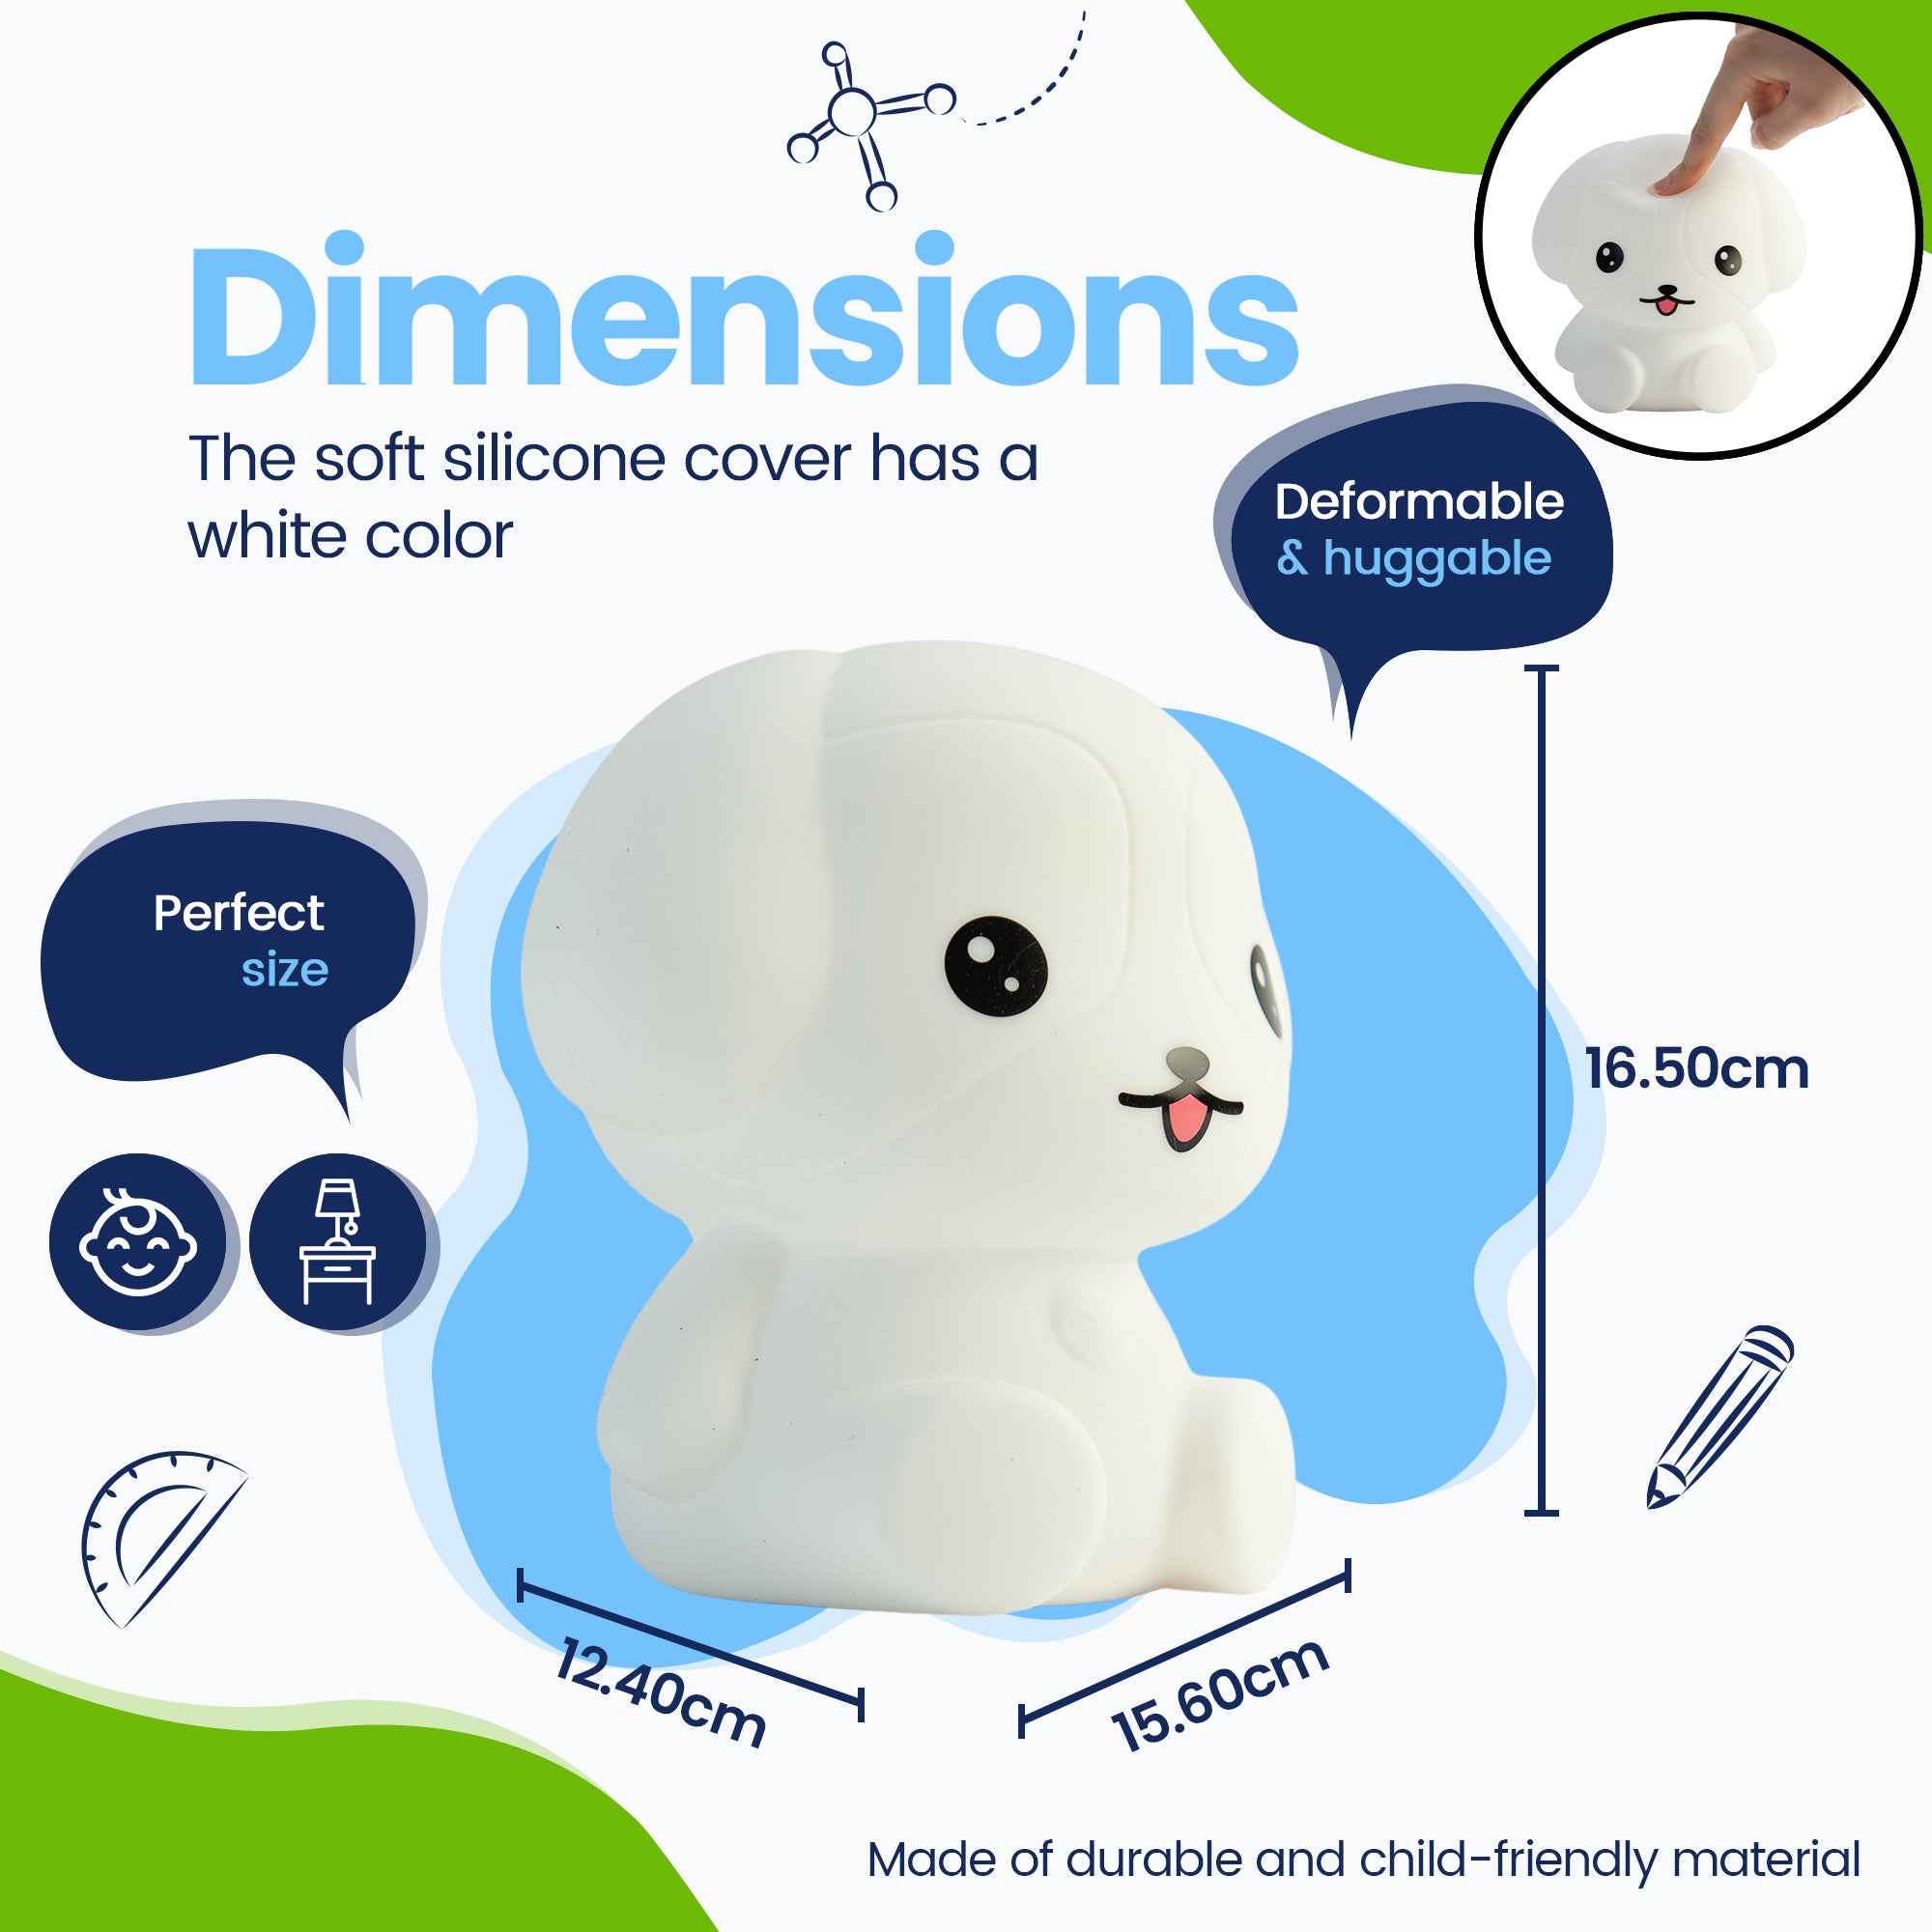 Dimensions Puppy Night Lamp - Perfect size - Premium Design - The silicone cover is white in color